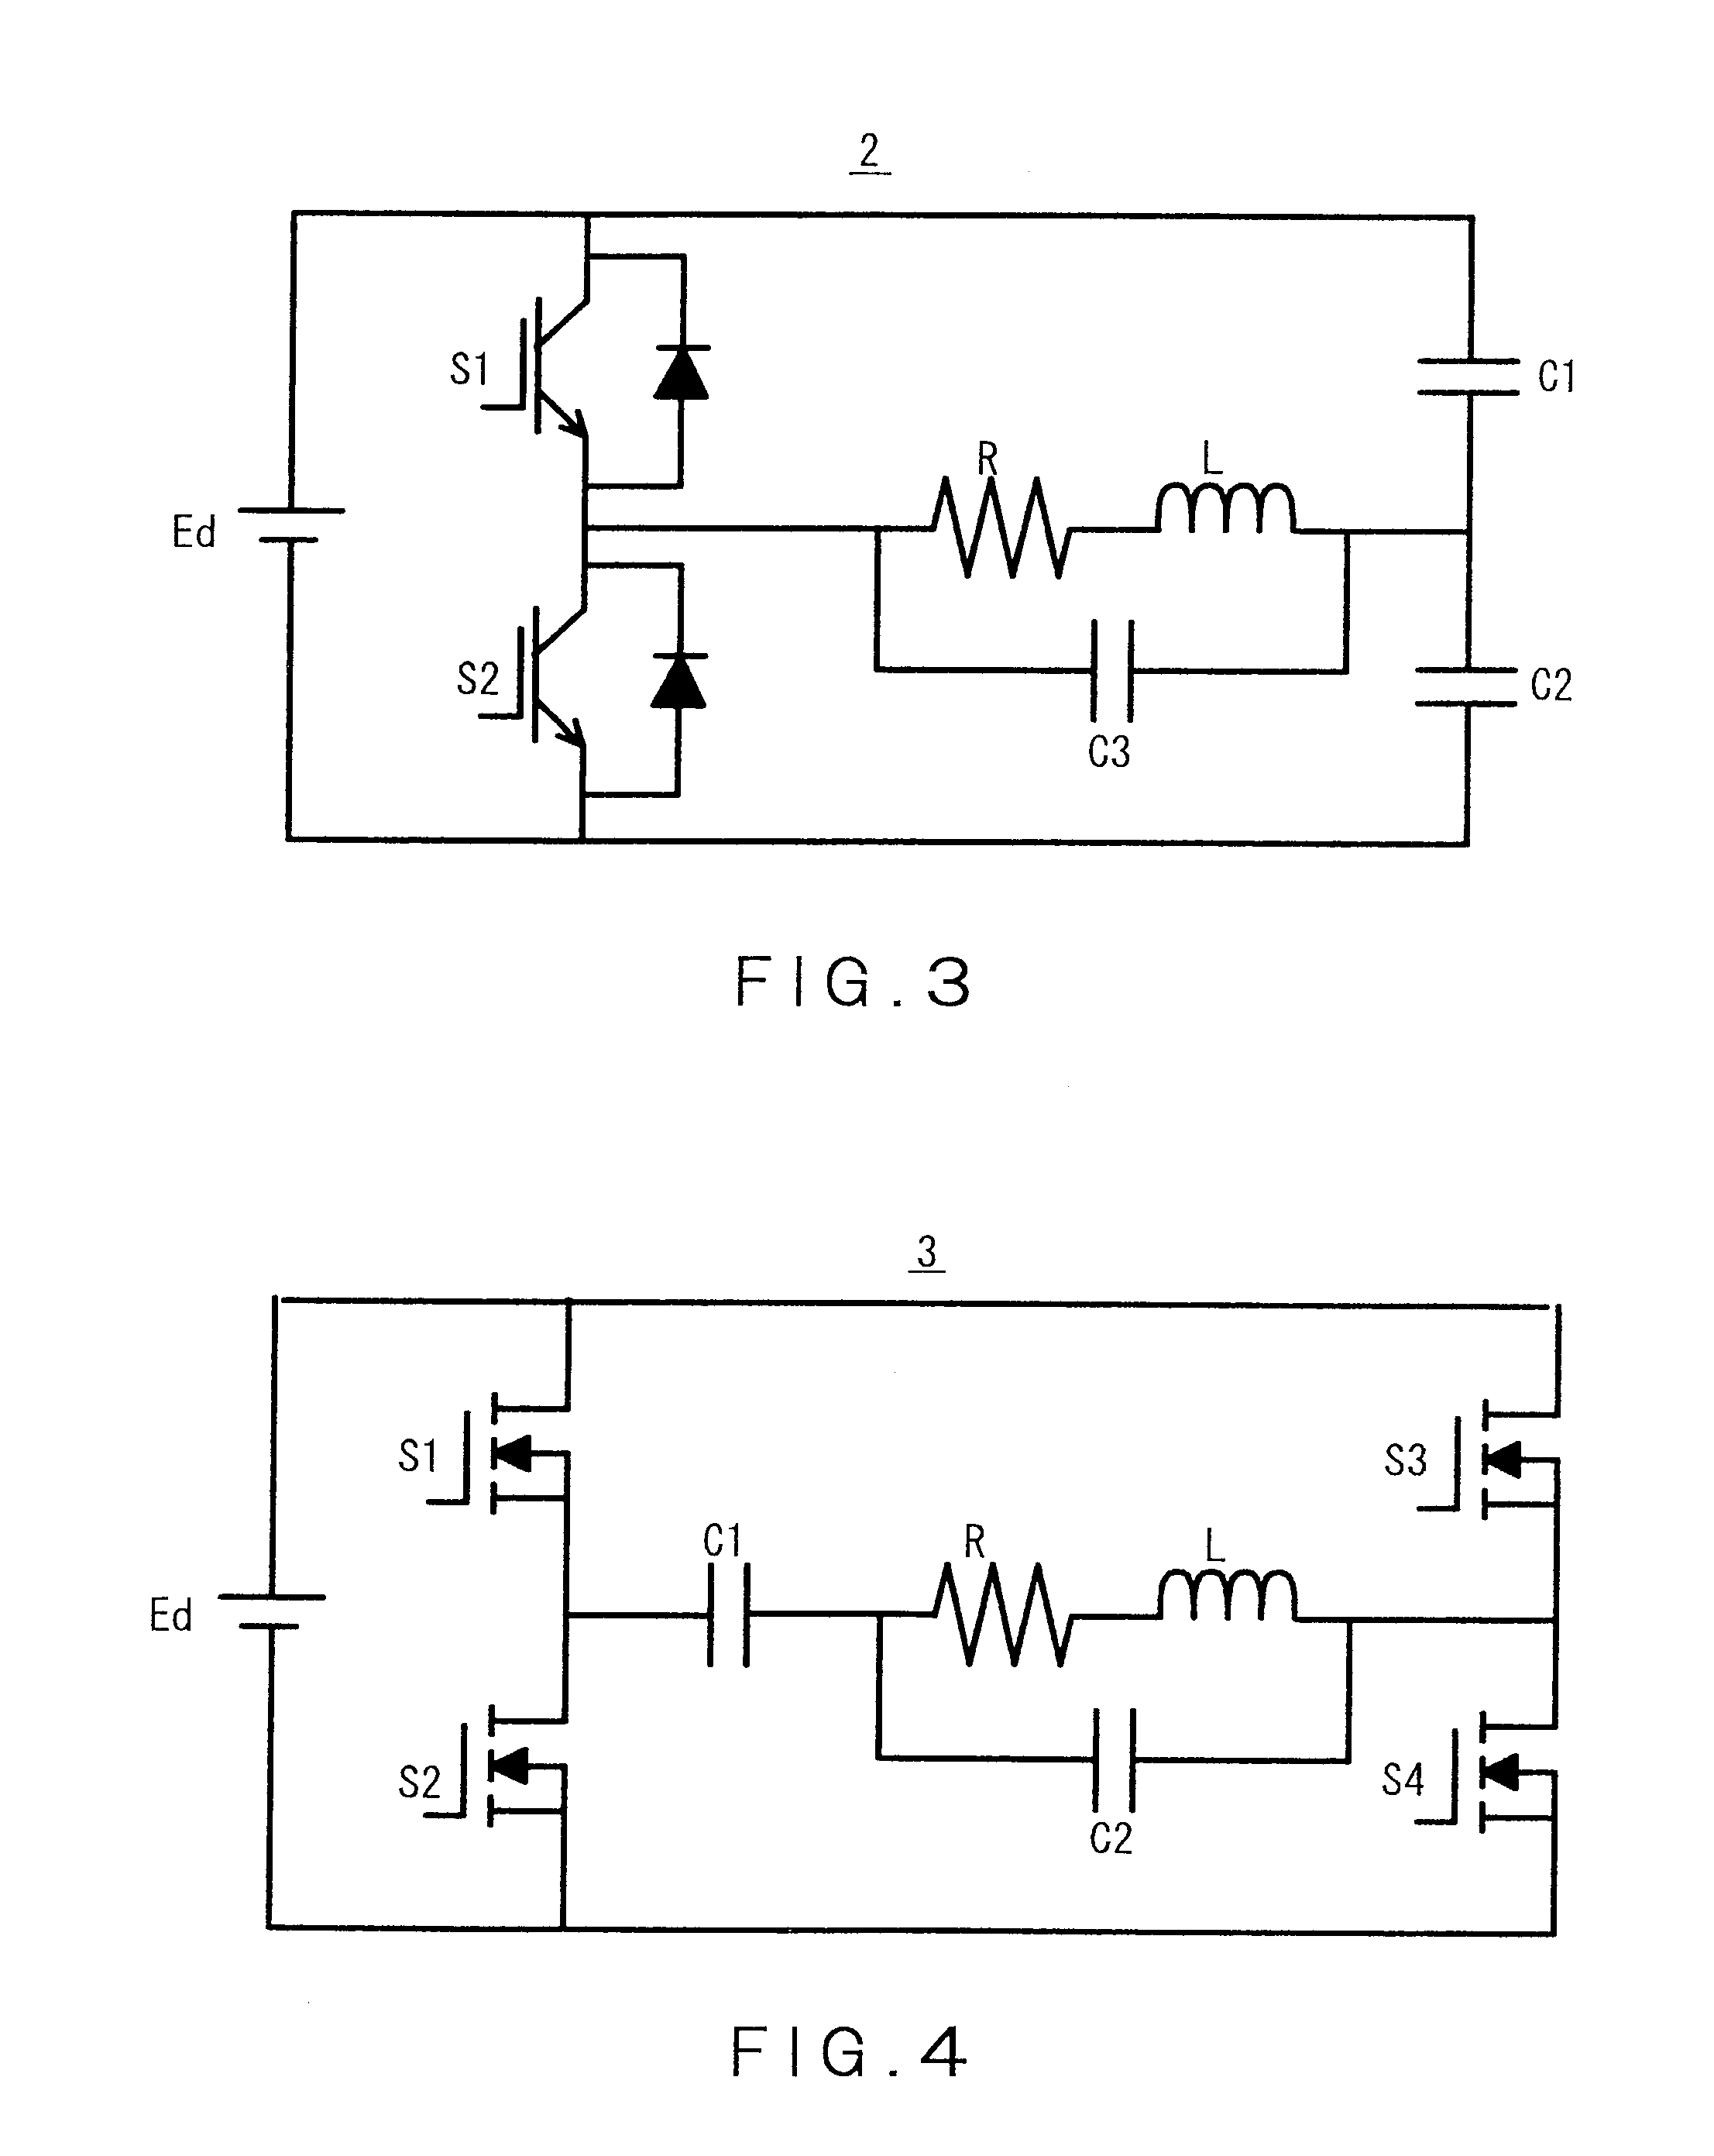 Zero voltage switching high-frequency inverter